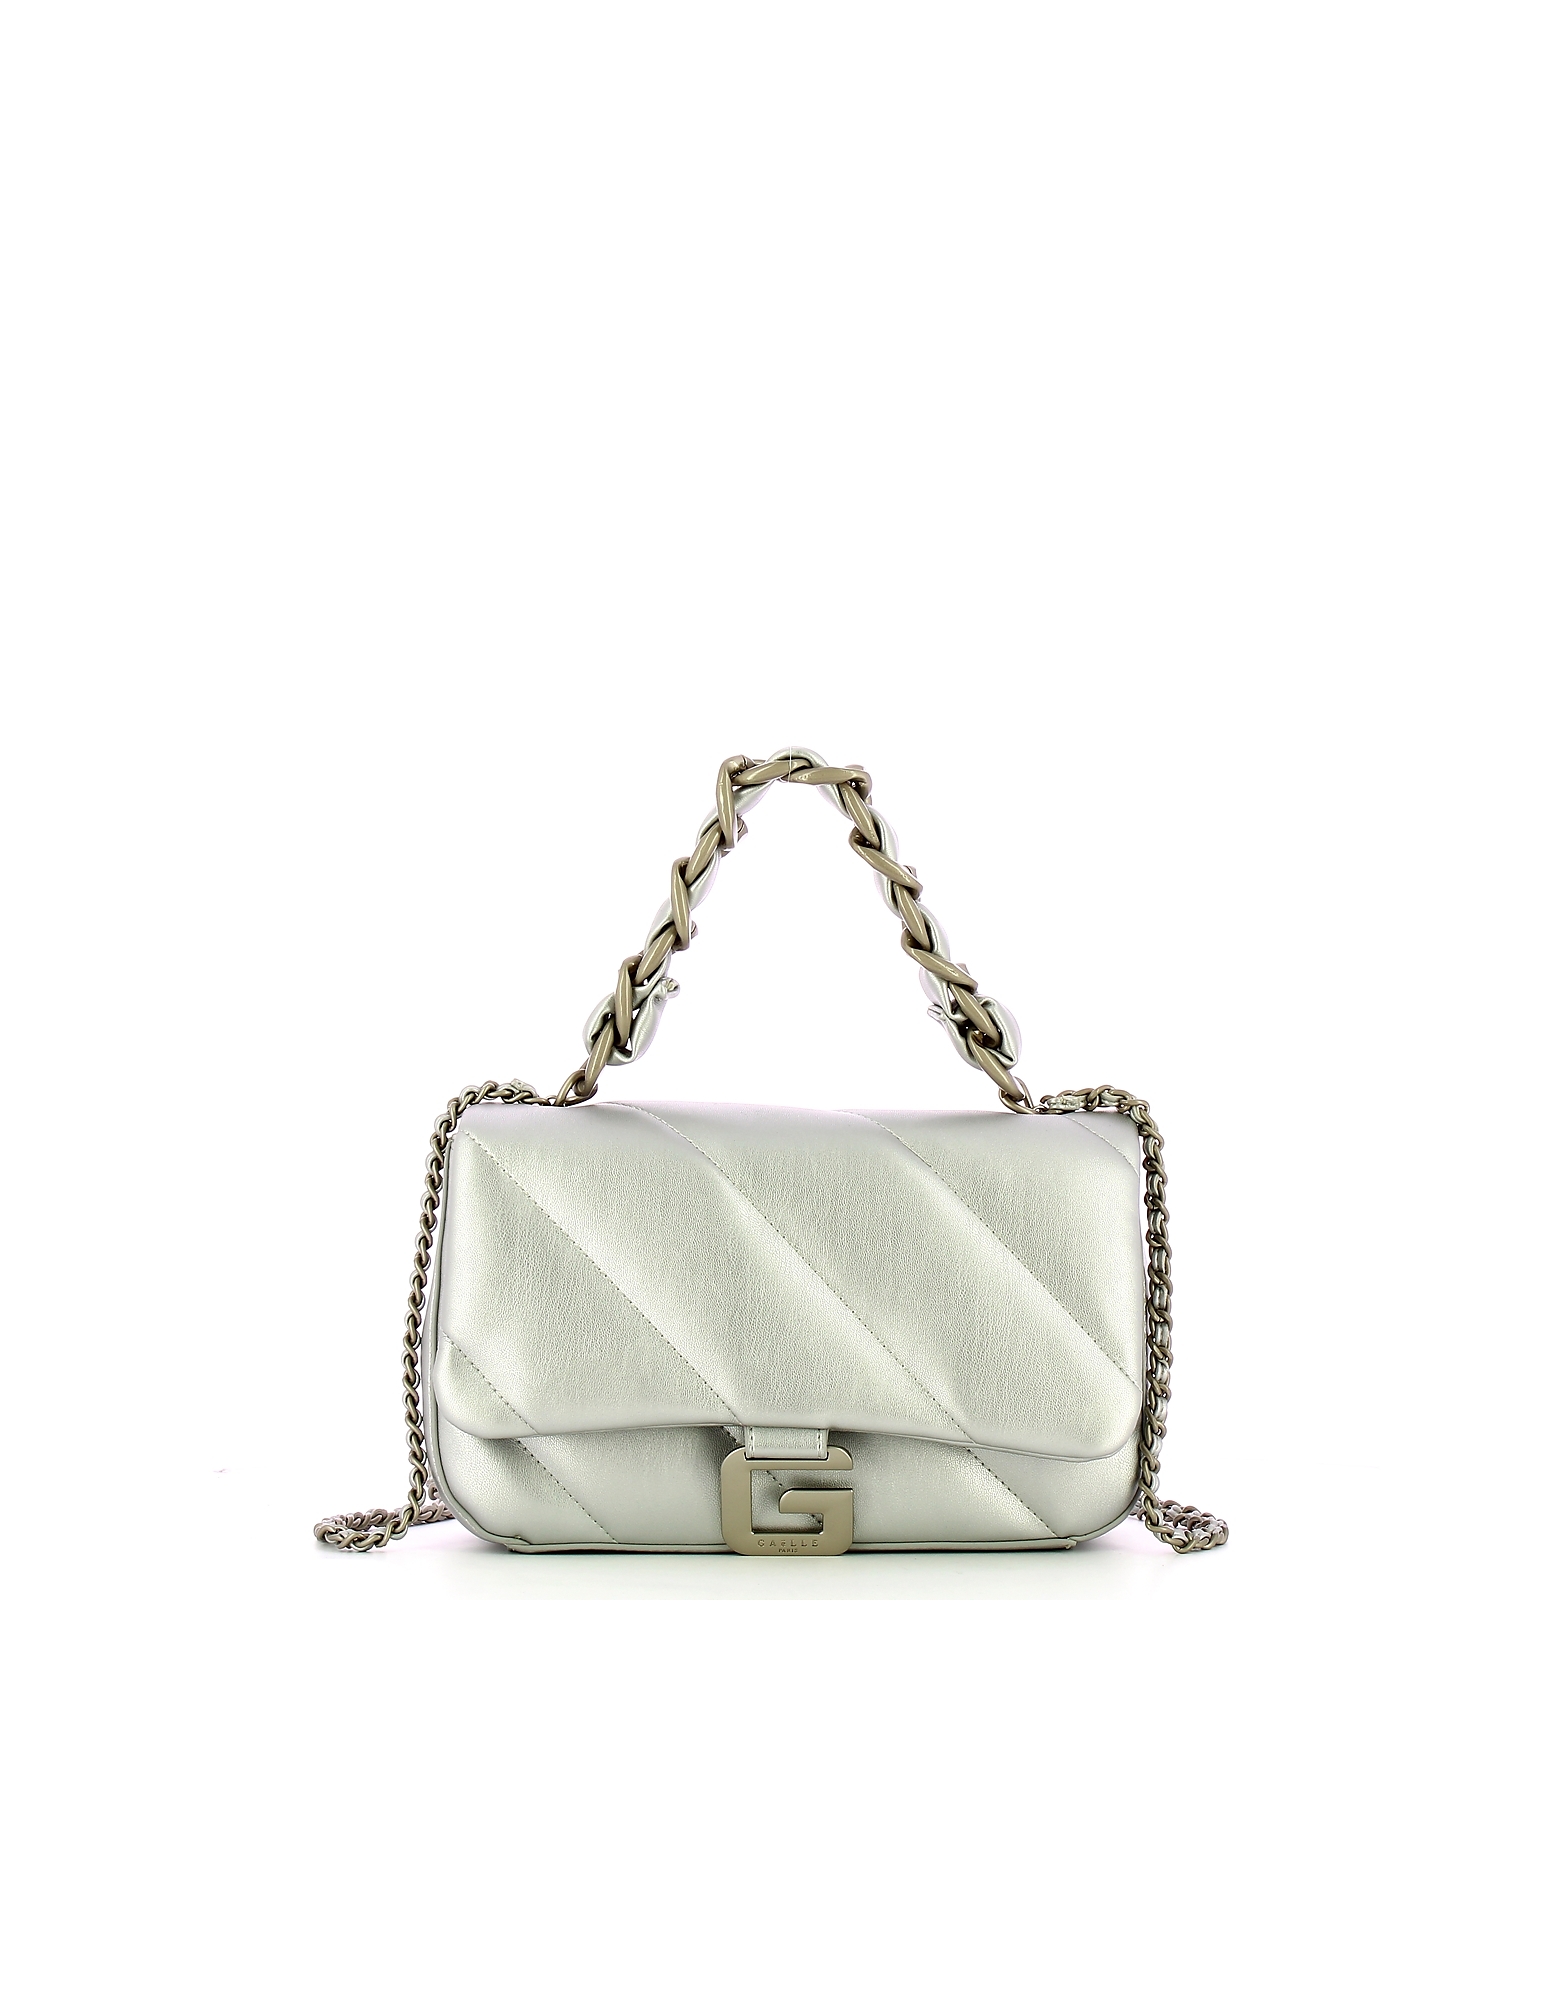 Gaelle Paris Designer Handbags Women's Bag